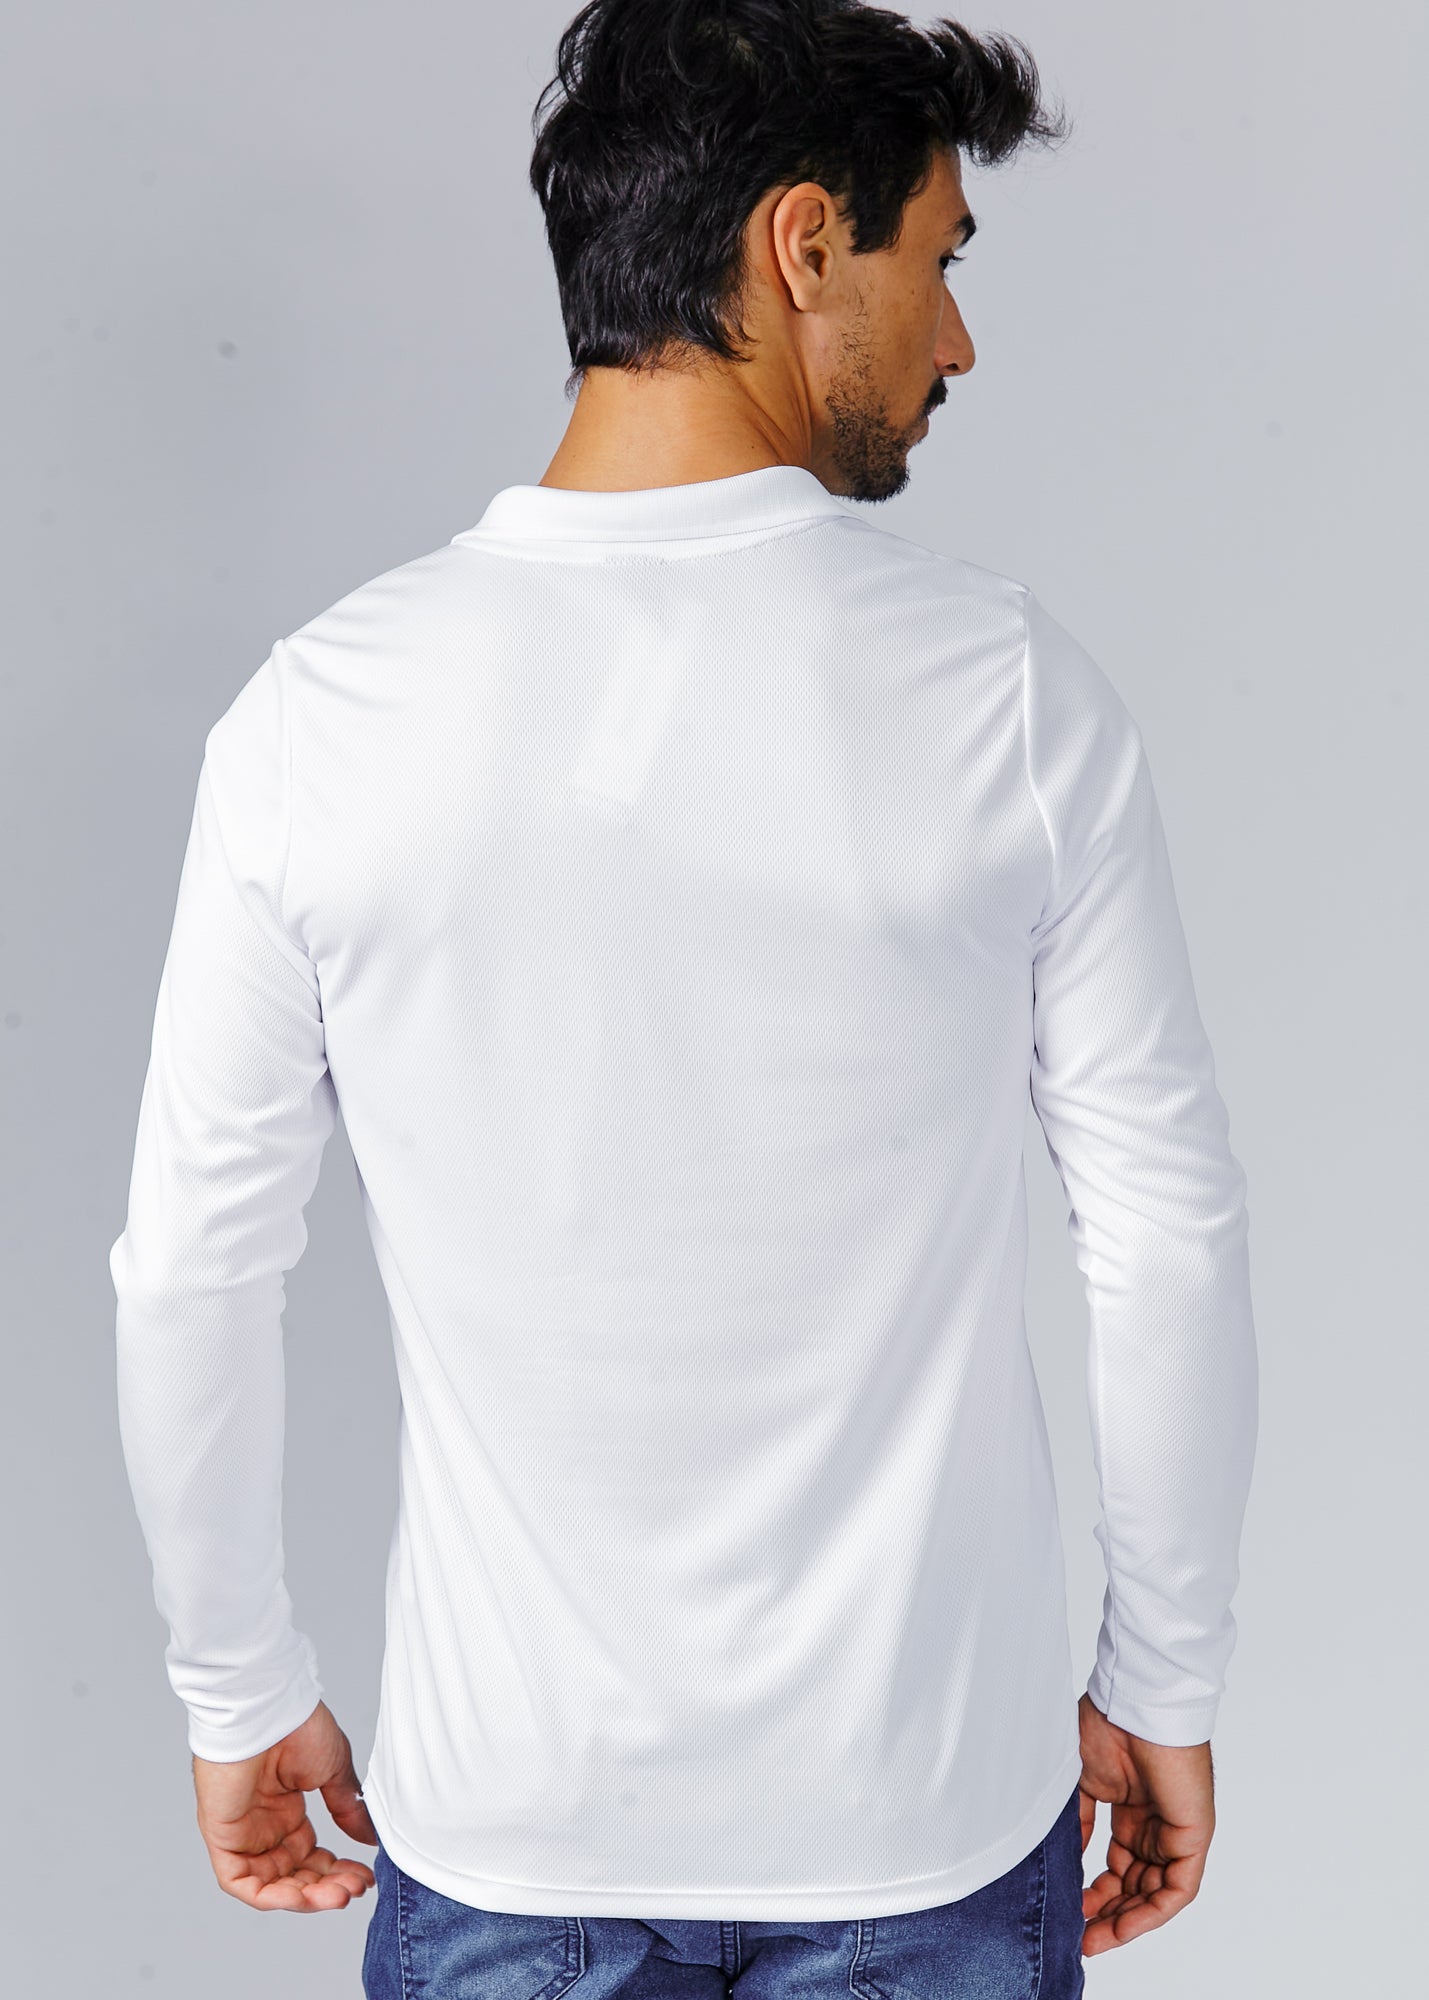 Camisa Polo Dry Fit Manga Longa - Branca